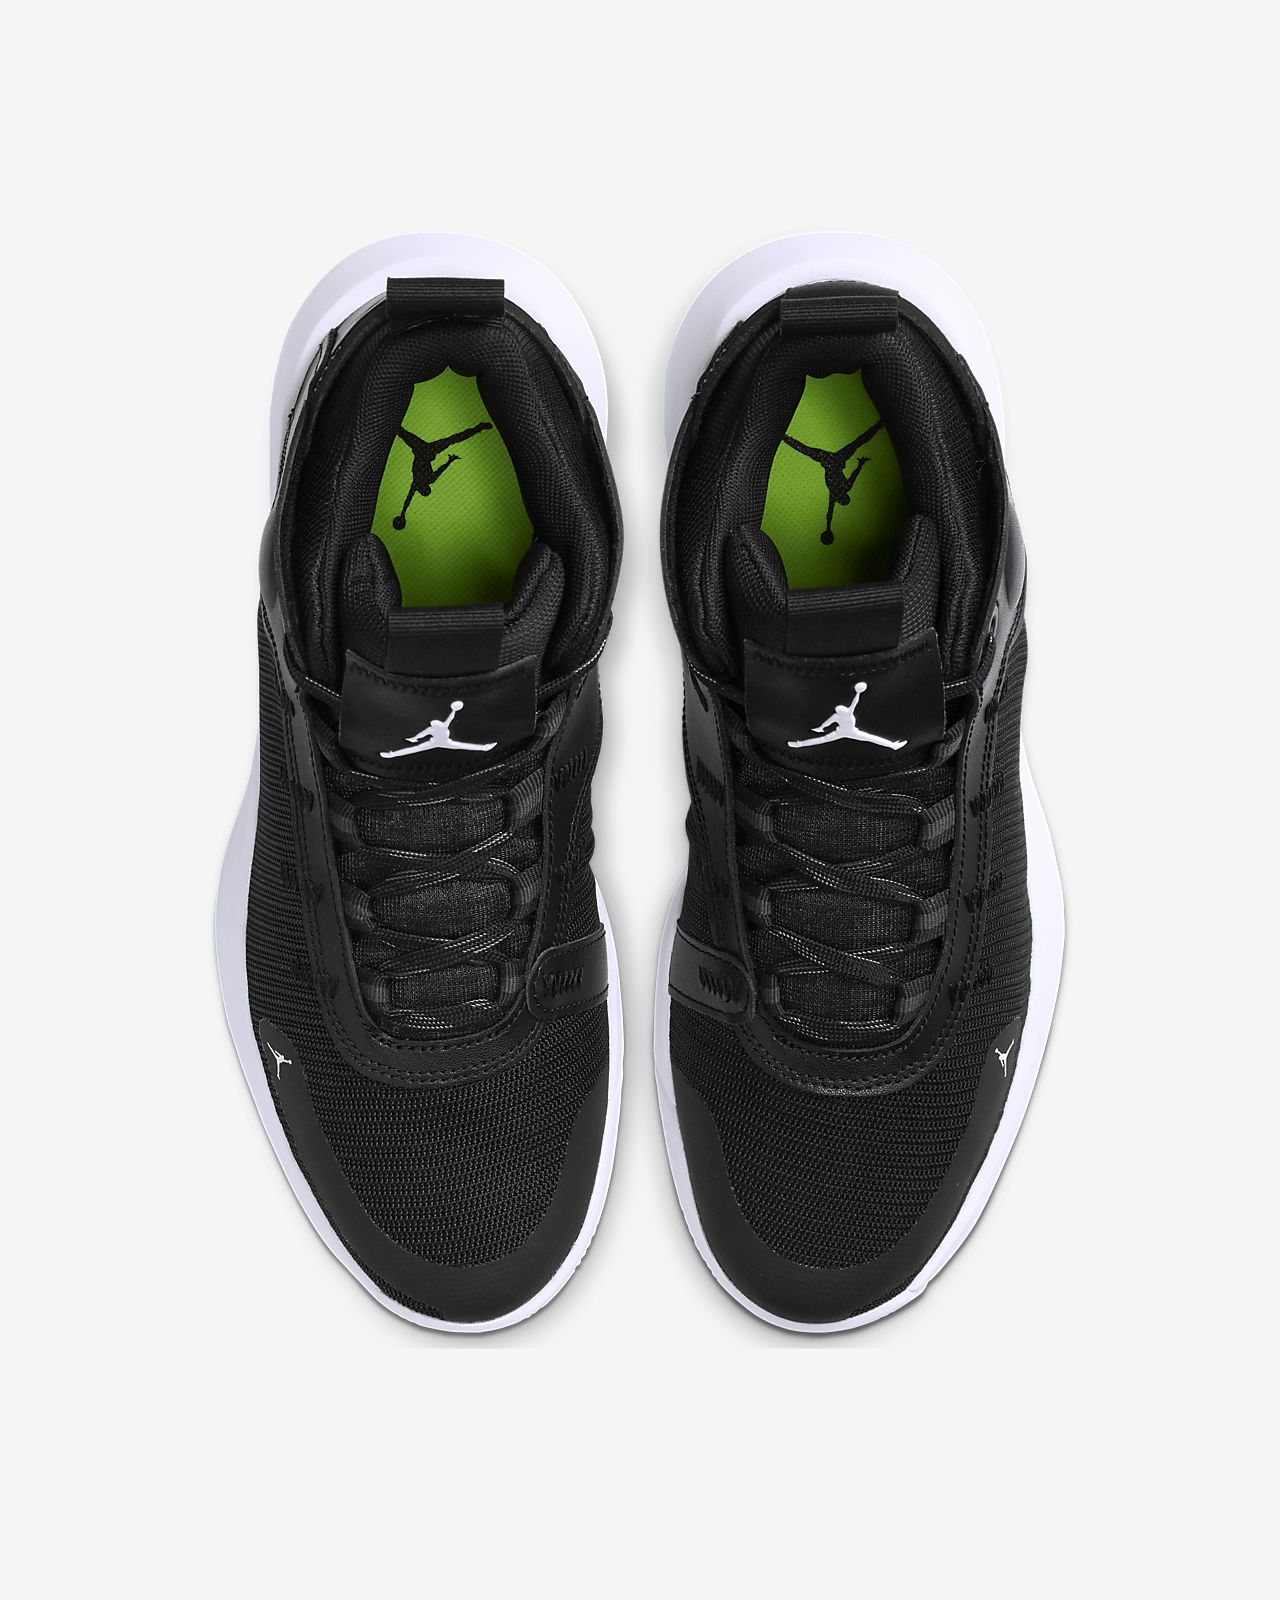 Calzado De Basquetbol Para Hombre Jordan Jumpman 2020 Nike Mx